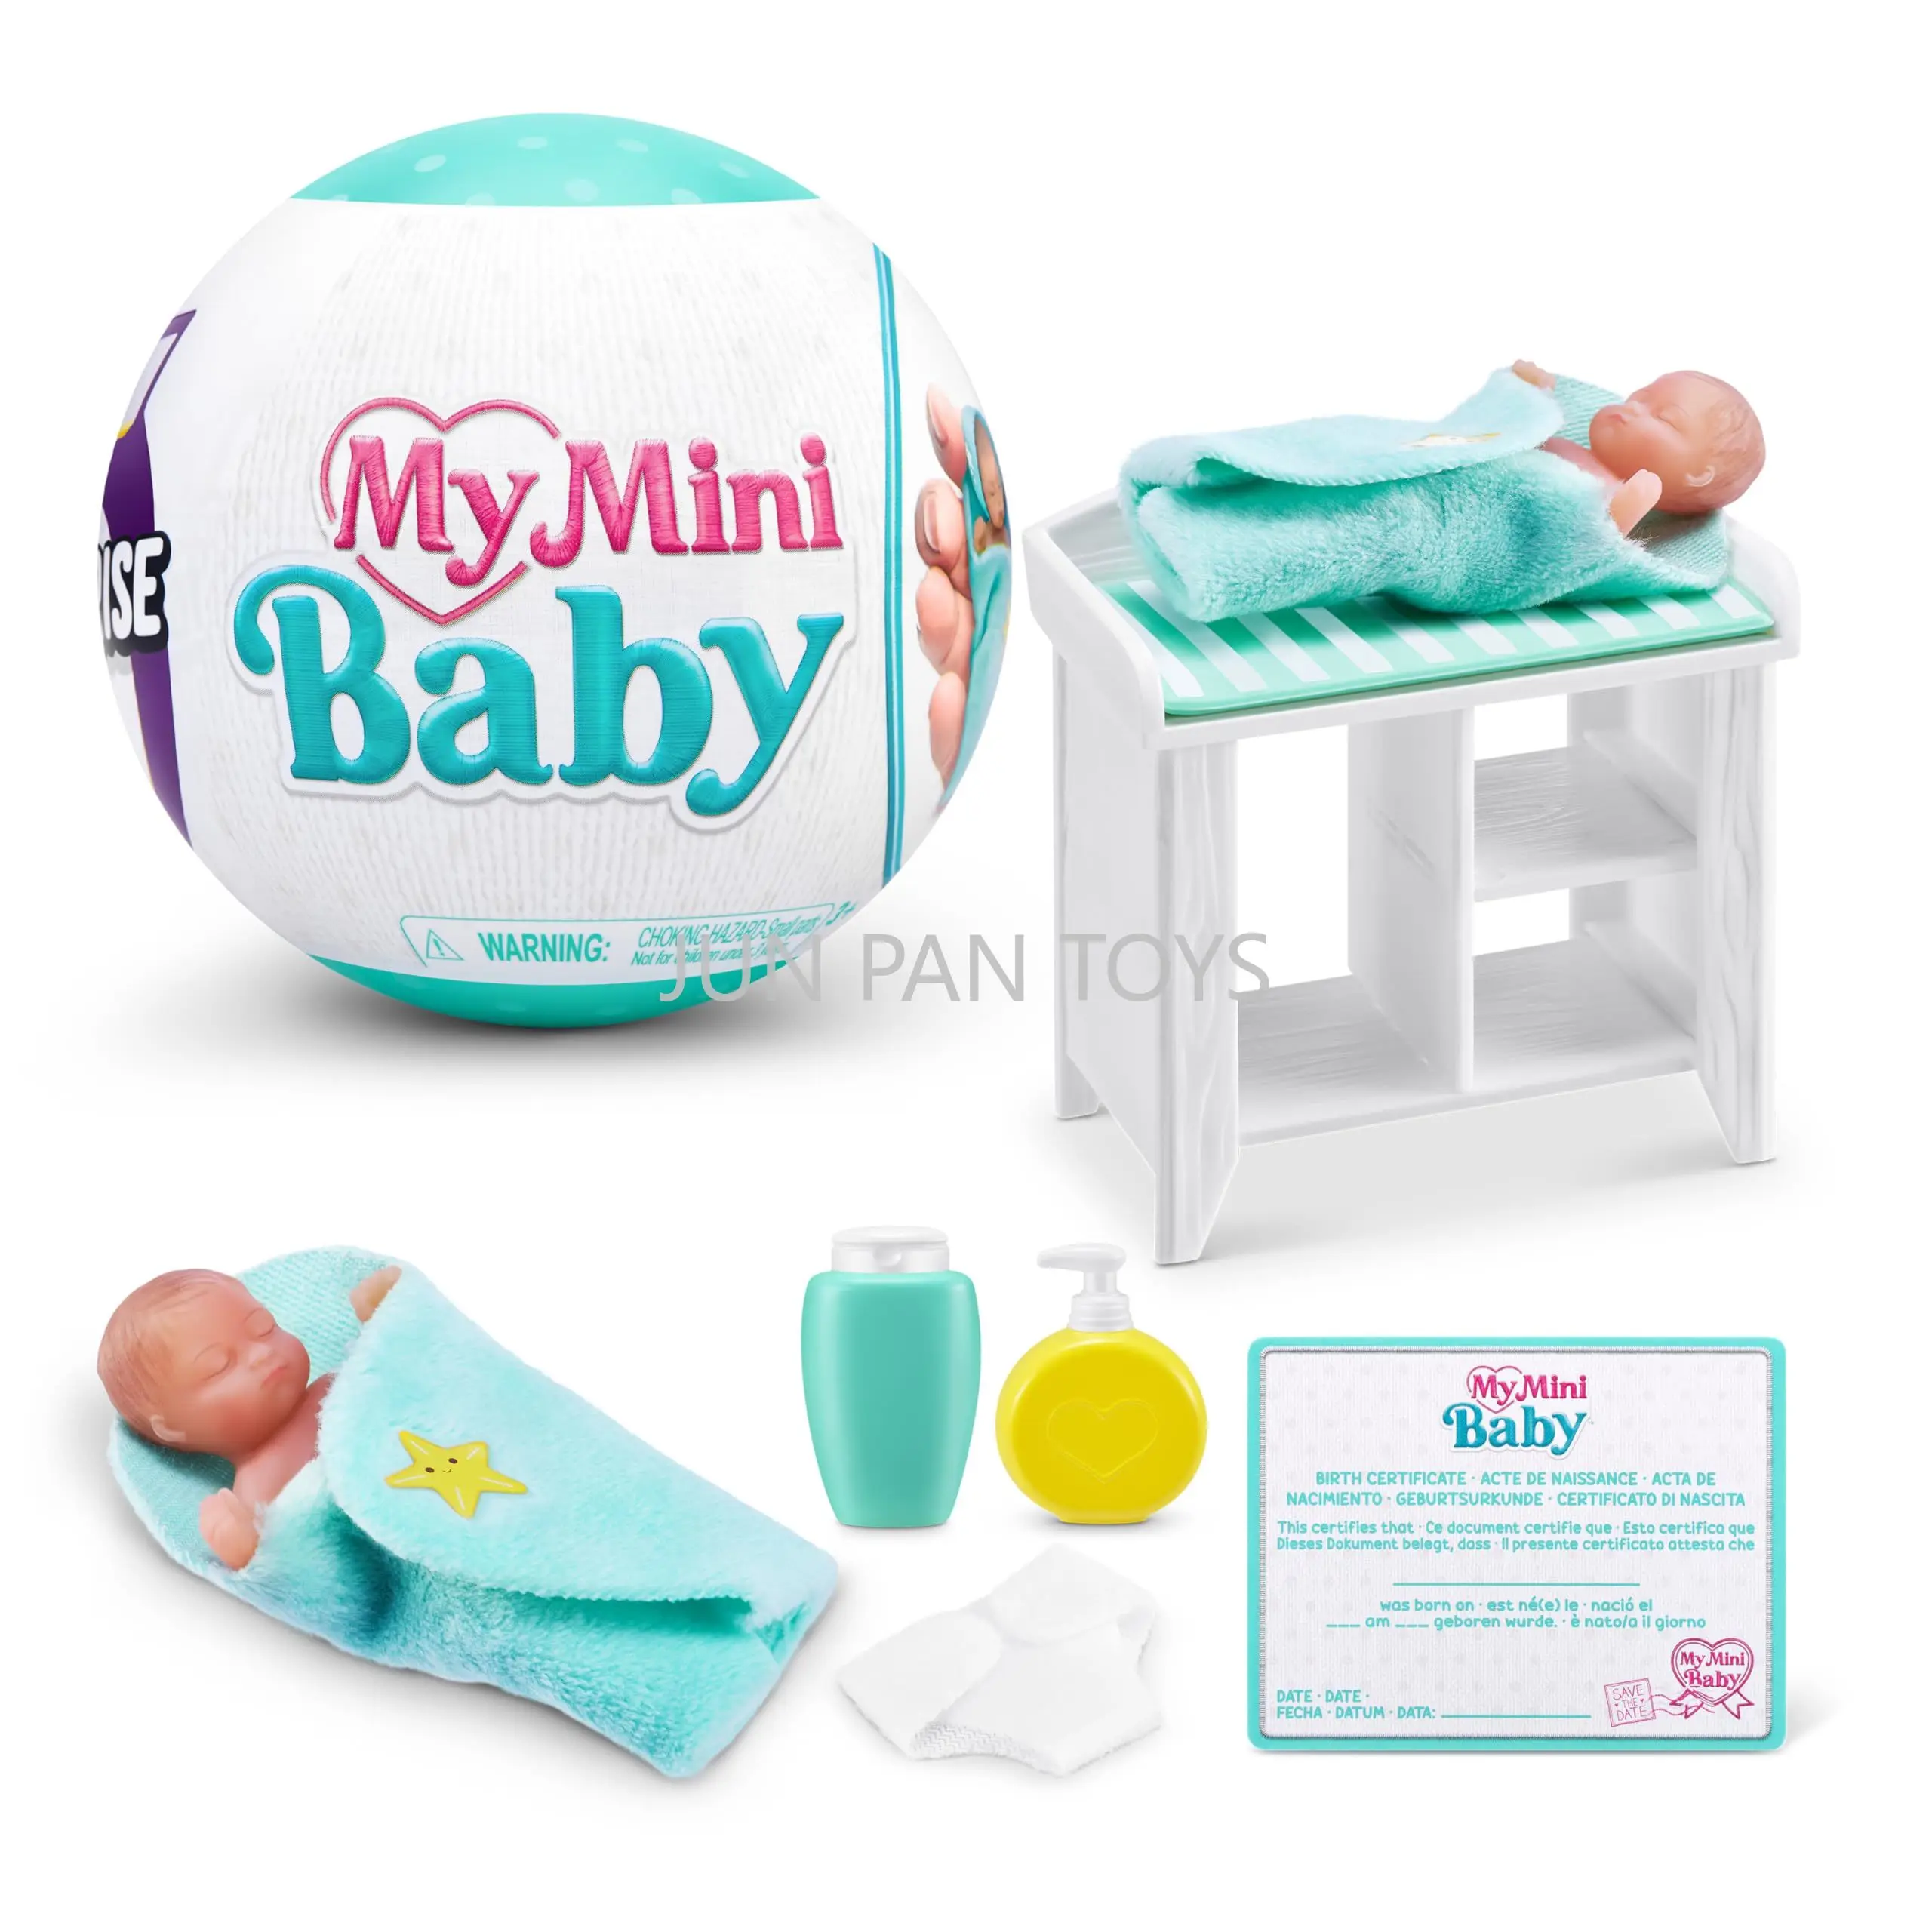 Zuru 5 kejutan seri bayi saya Mini, 1 koleksi mainan kapsul misteri untuk anak perempuan miniatur realistis set bermain dan aksesoris